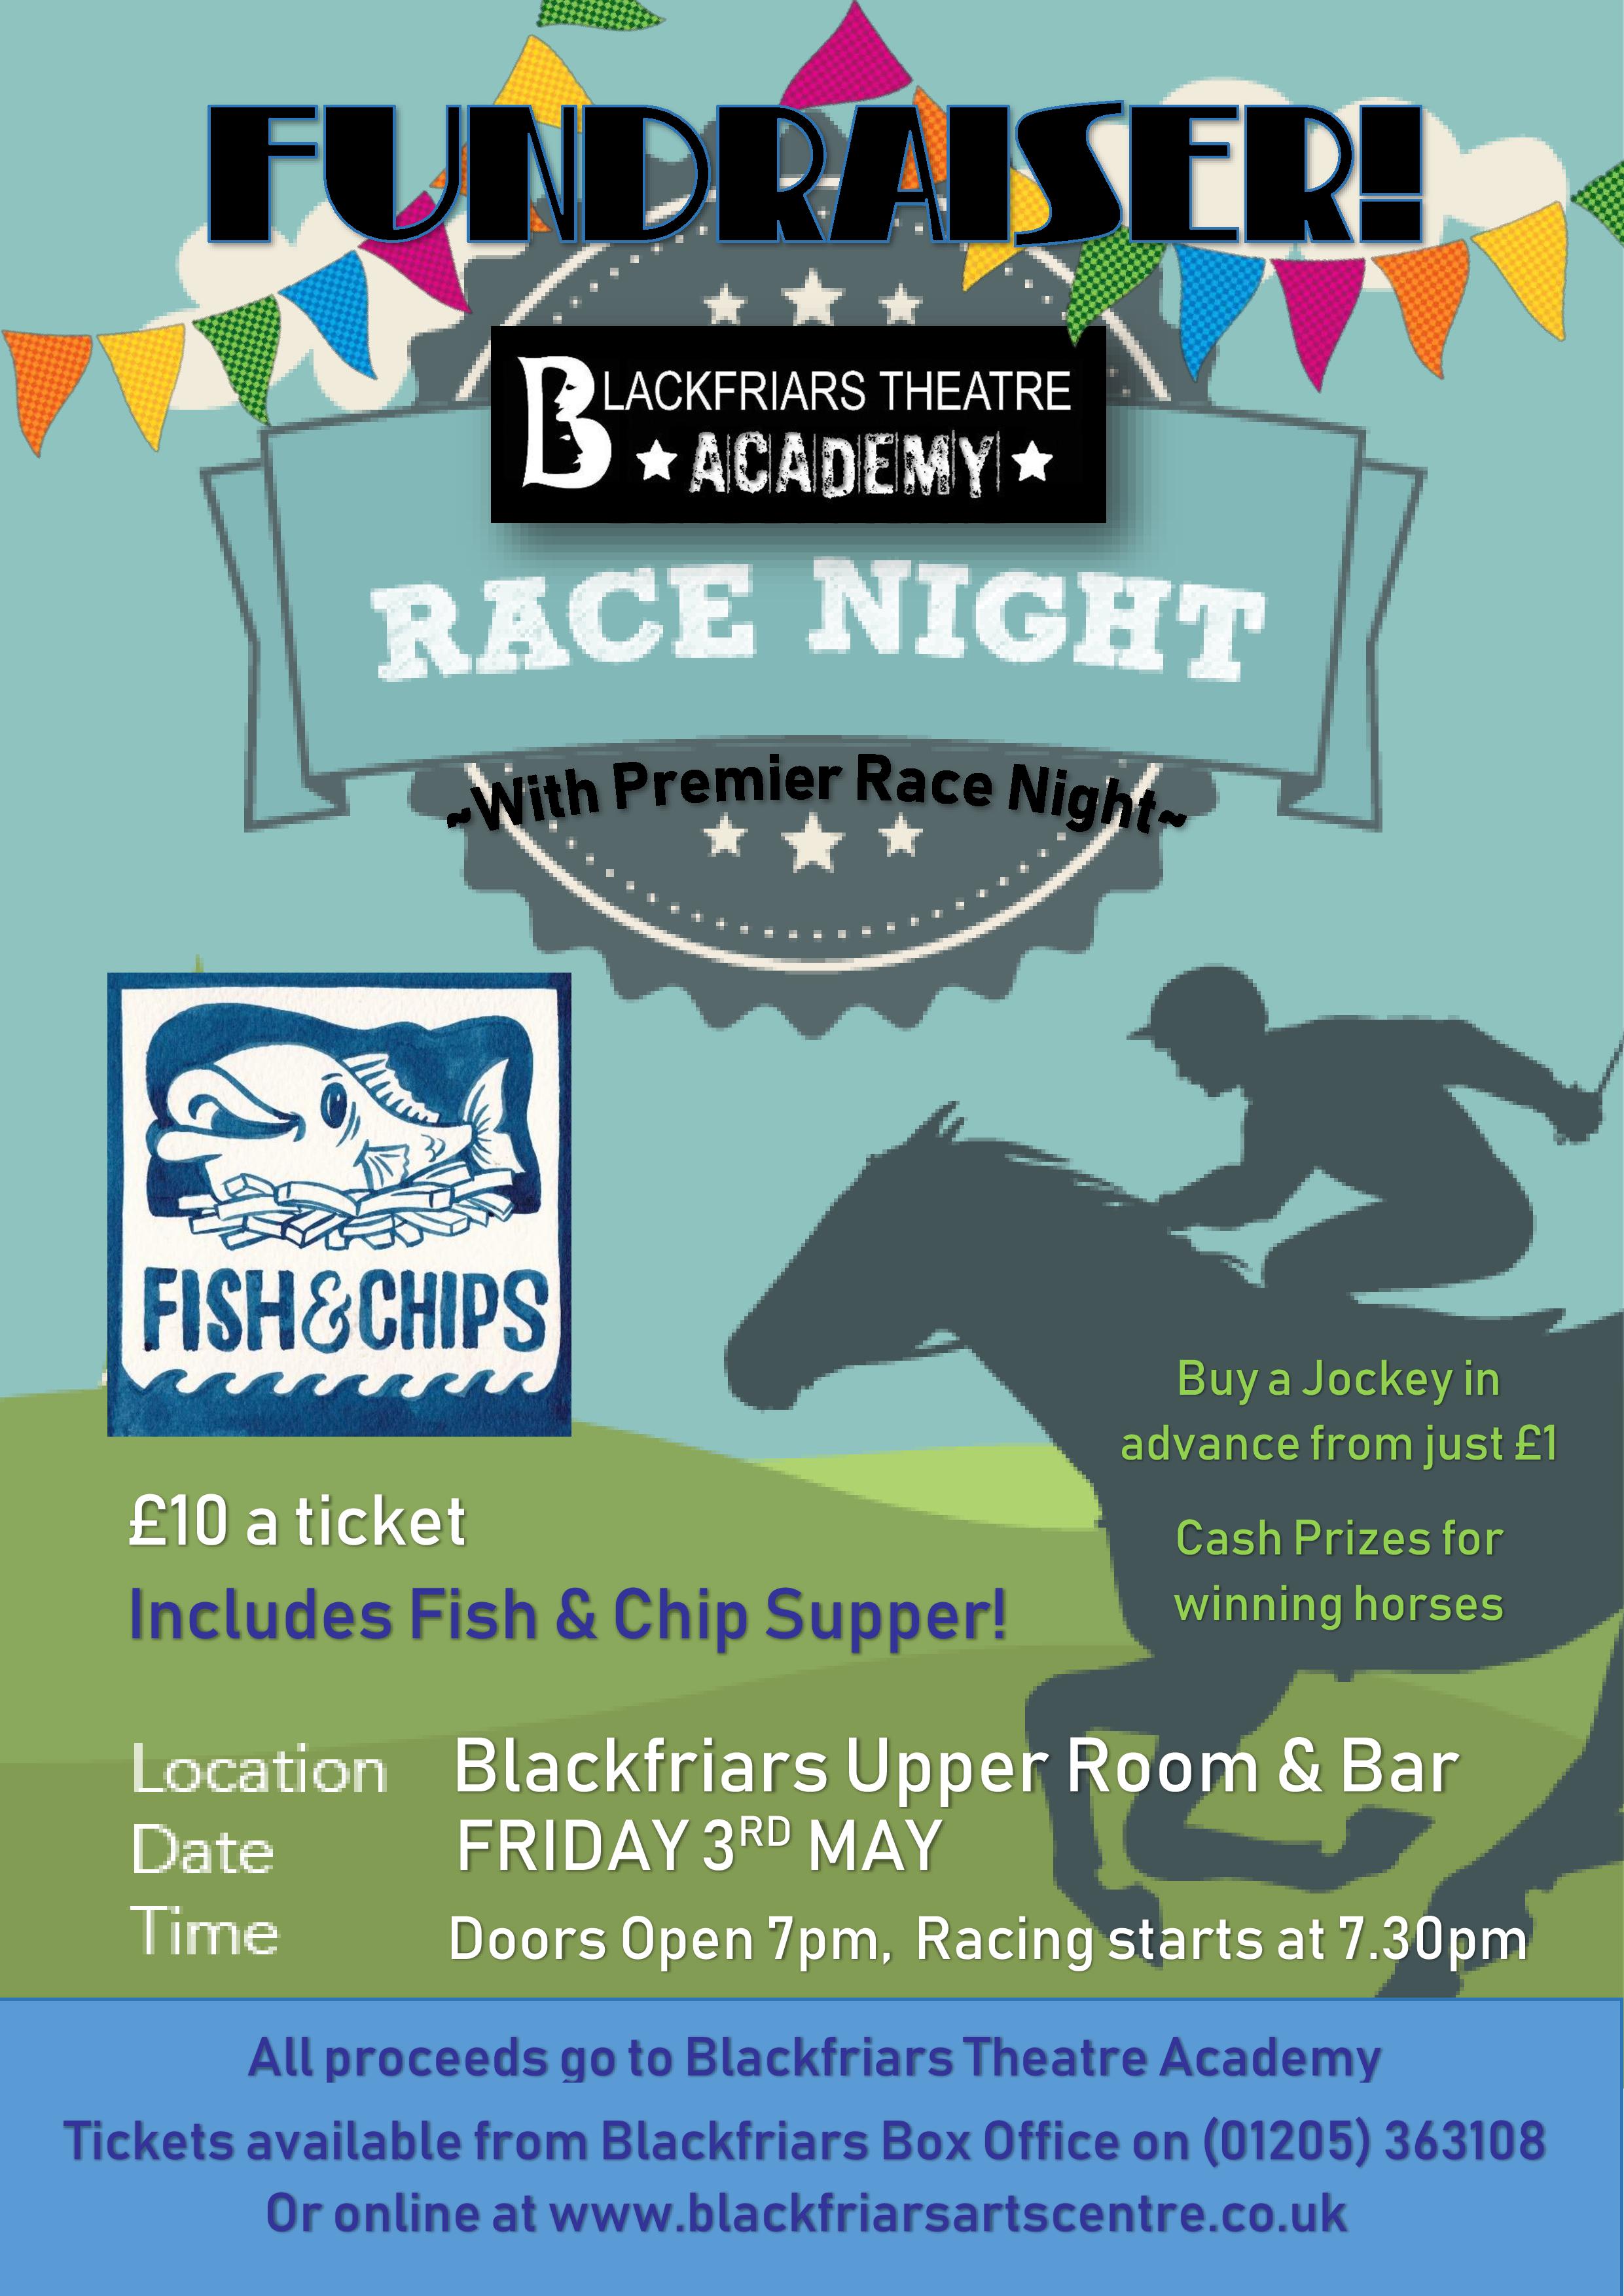 Race Night Fundraiser!